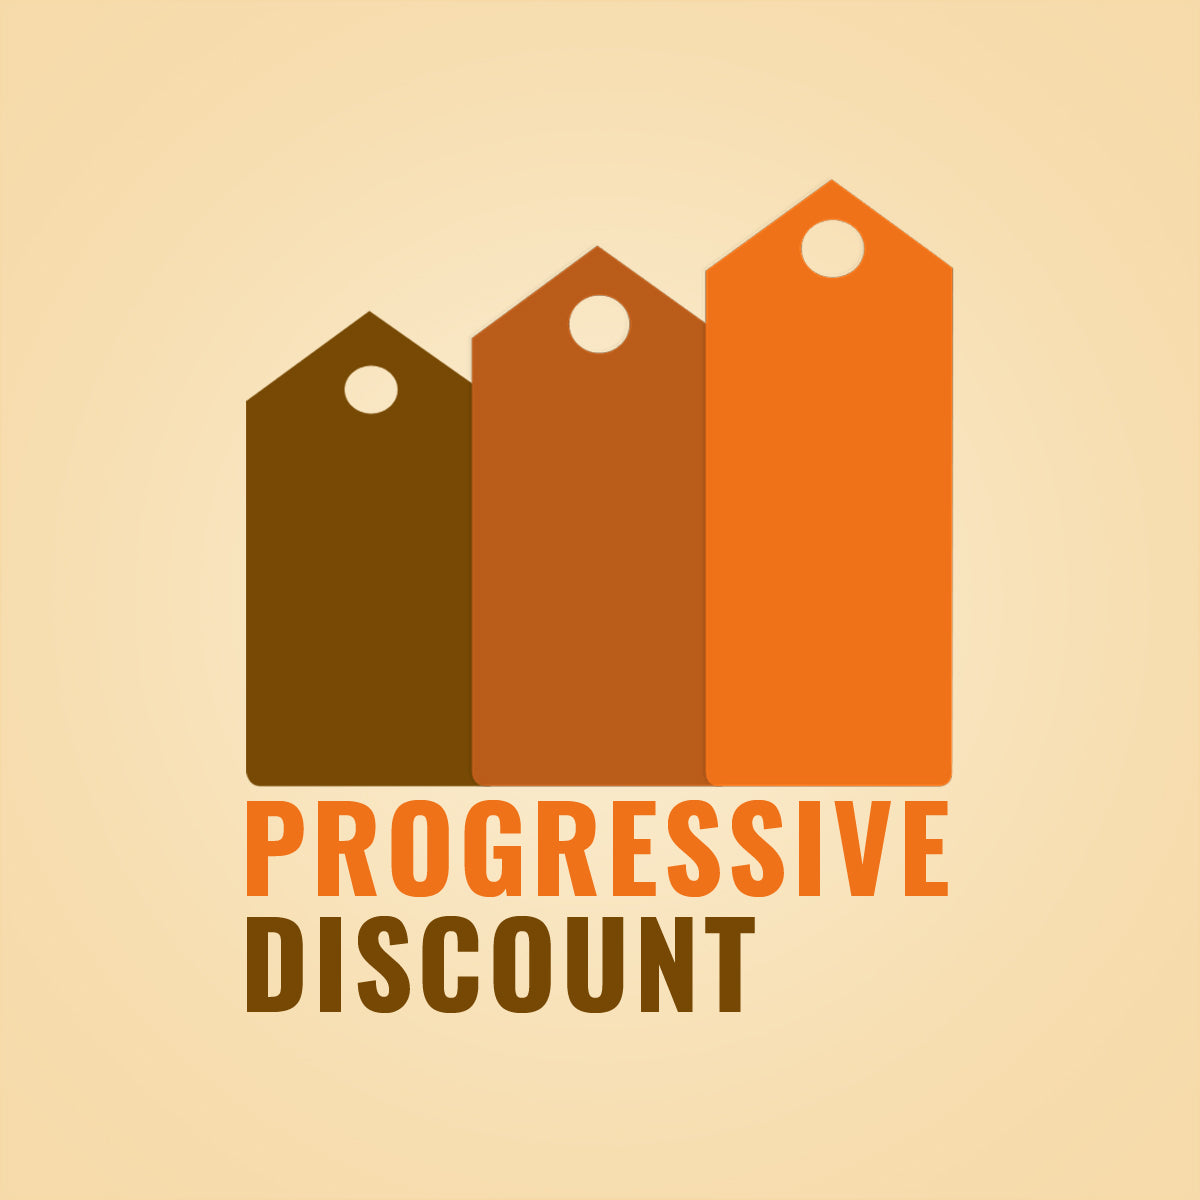 Progressive Discount by VGroup